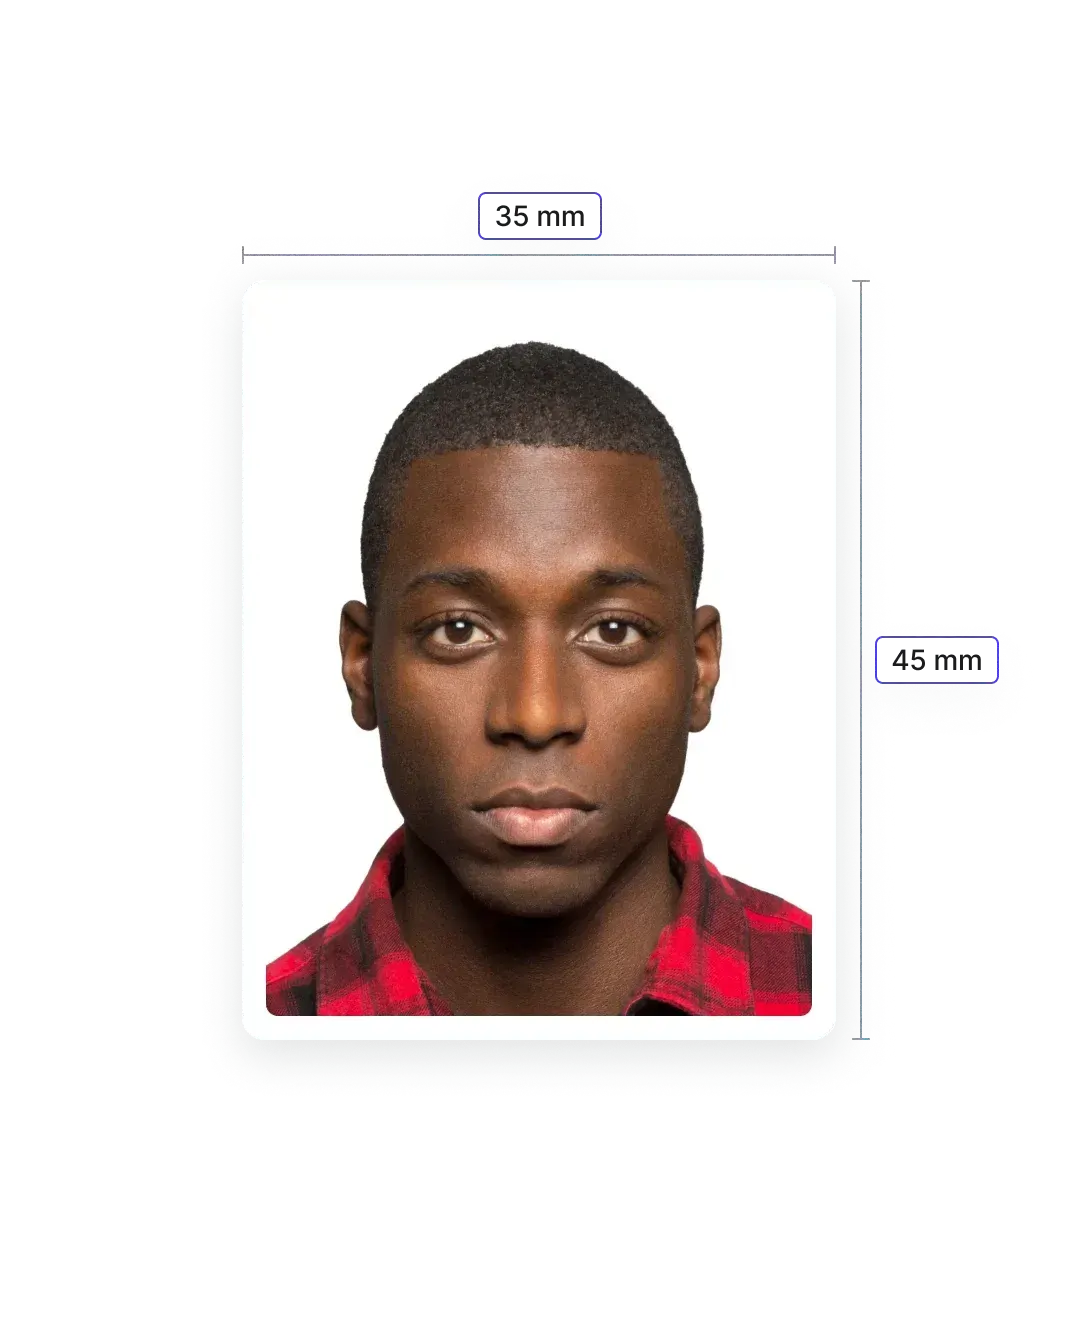 Jamaica Passport Photo - Size & Requirements